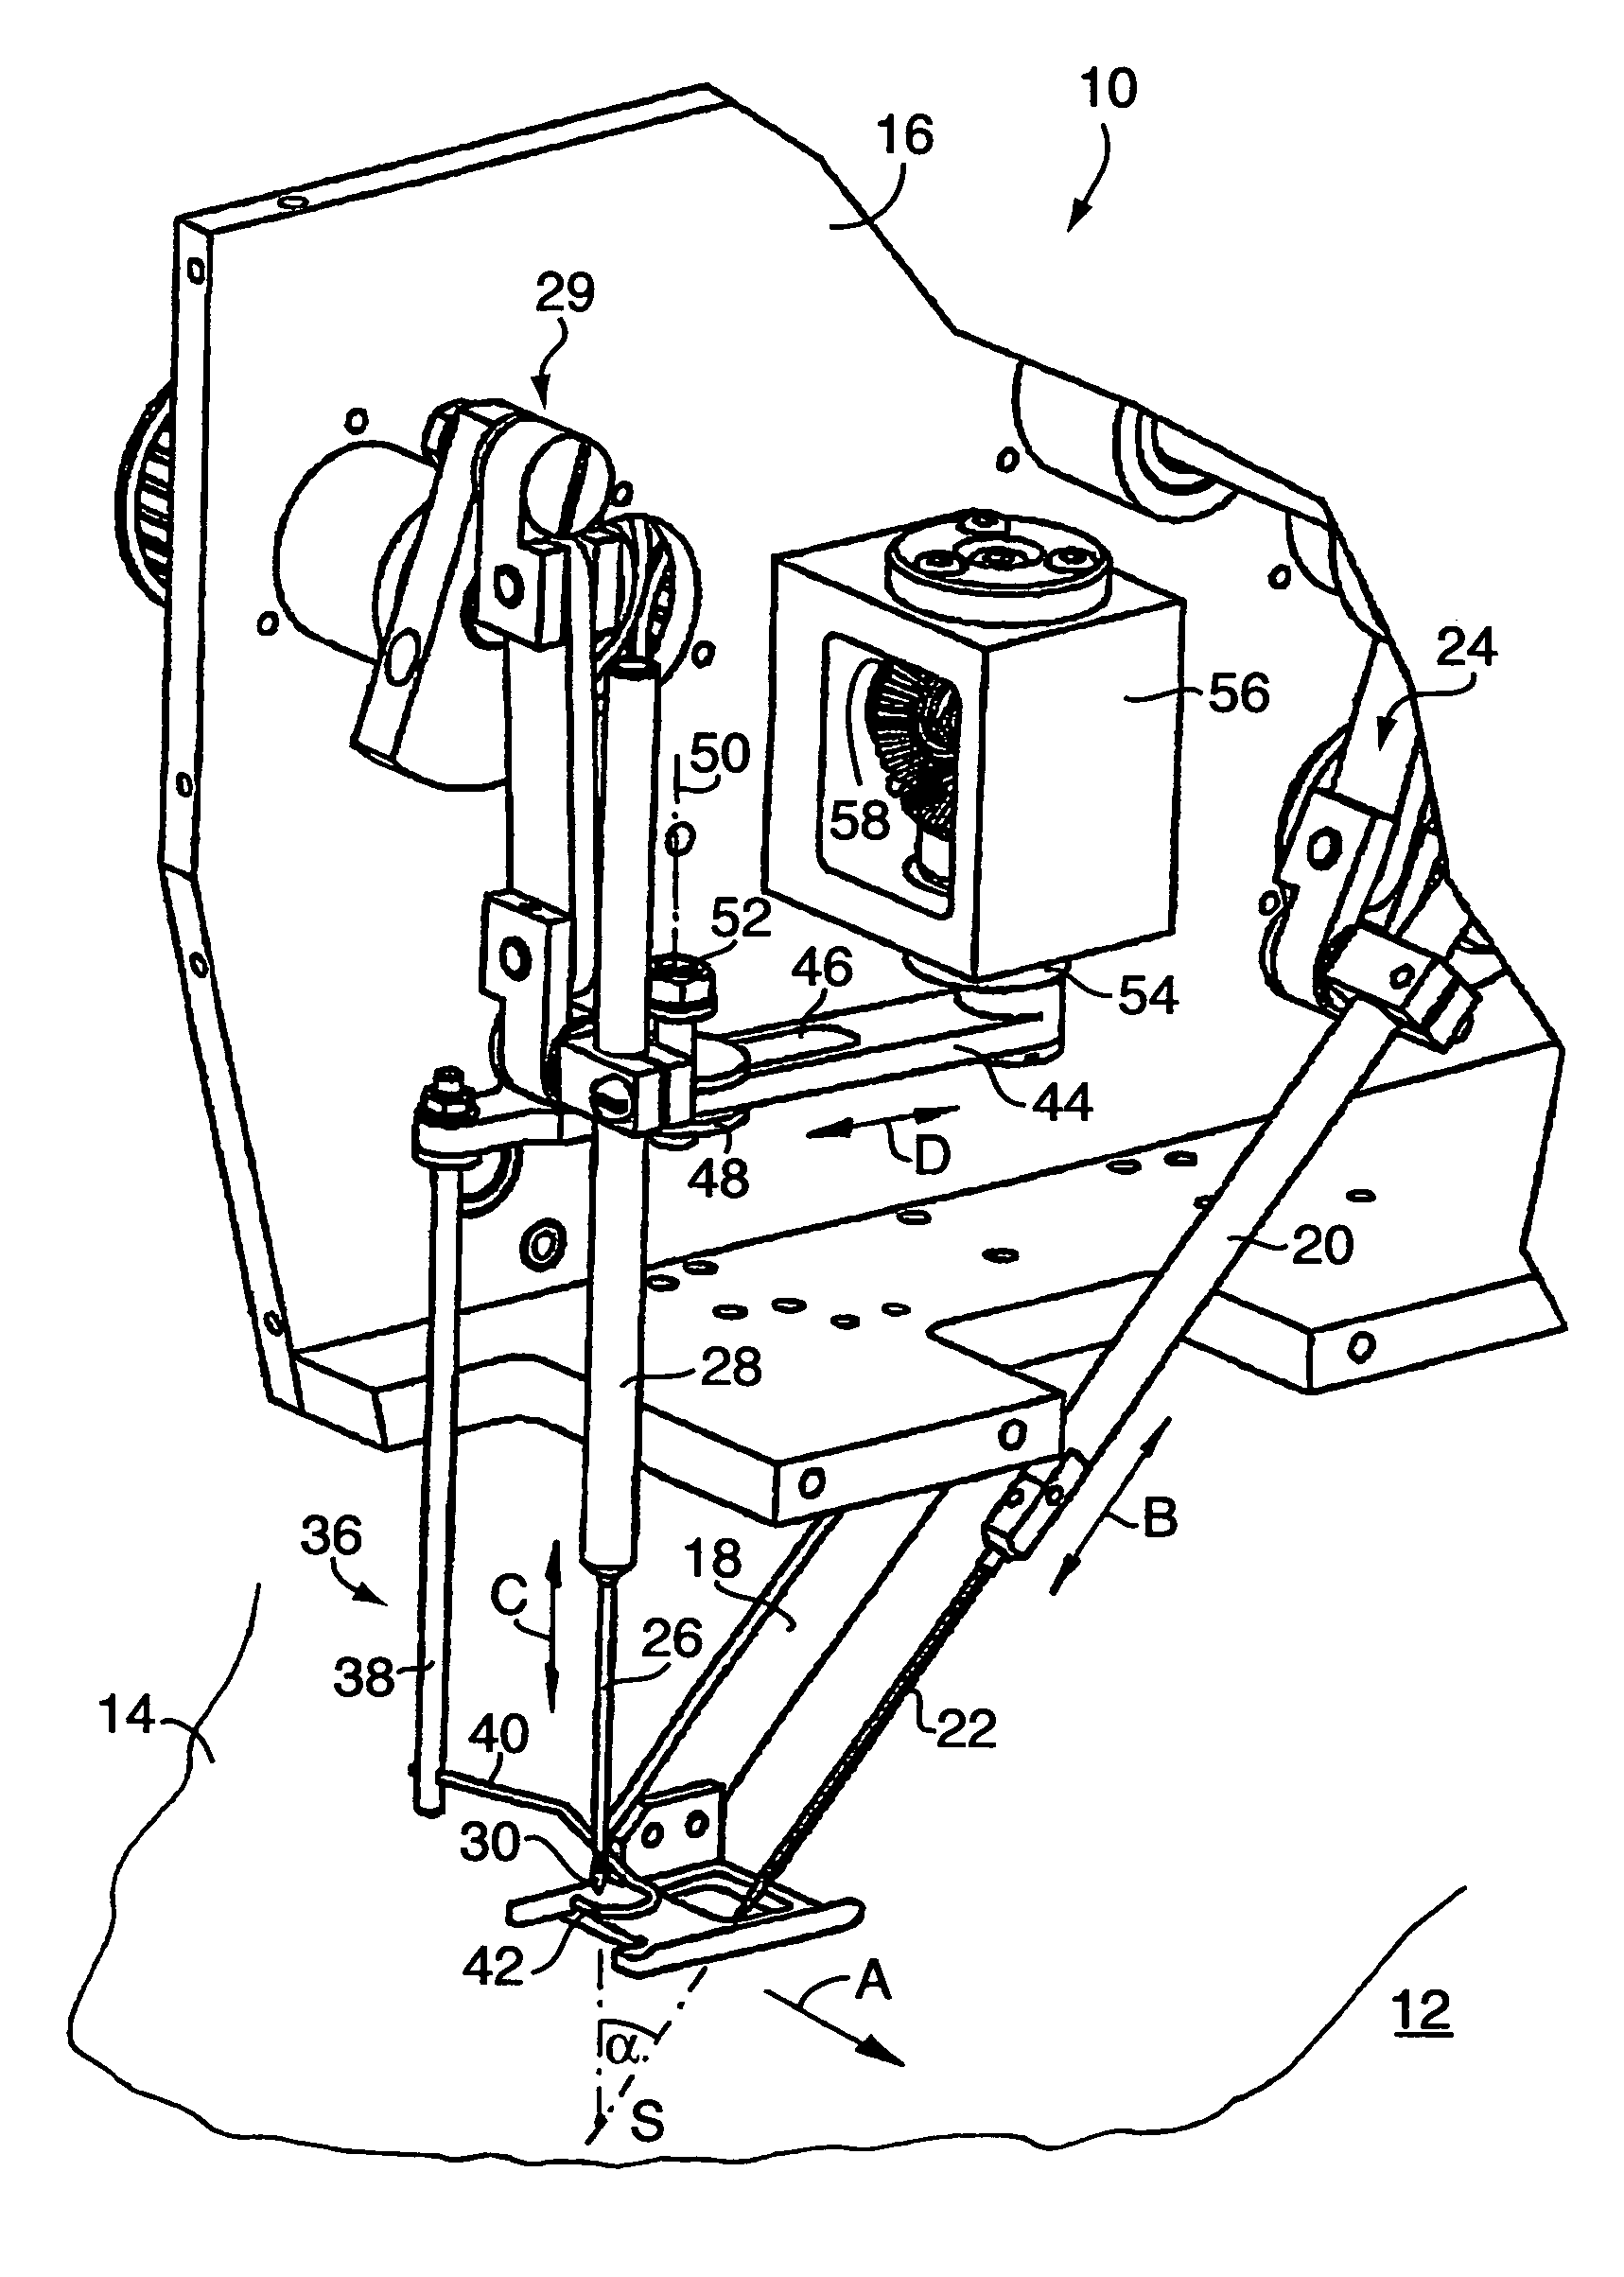 Chain stitch sewing mechanism